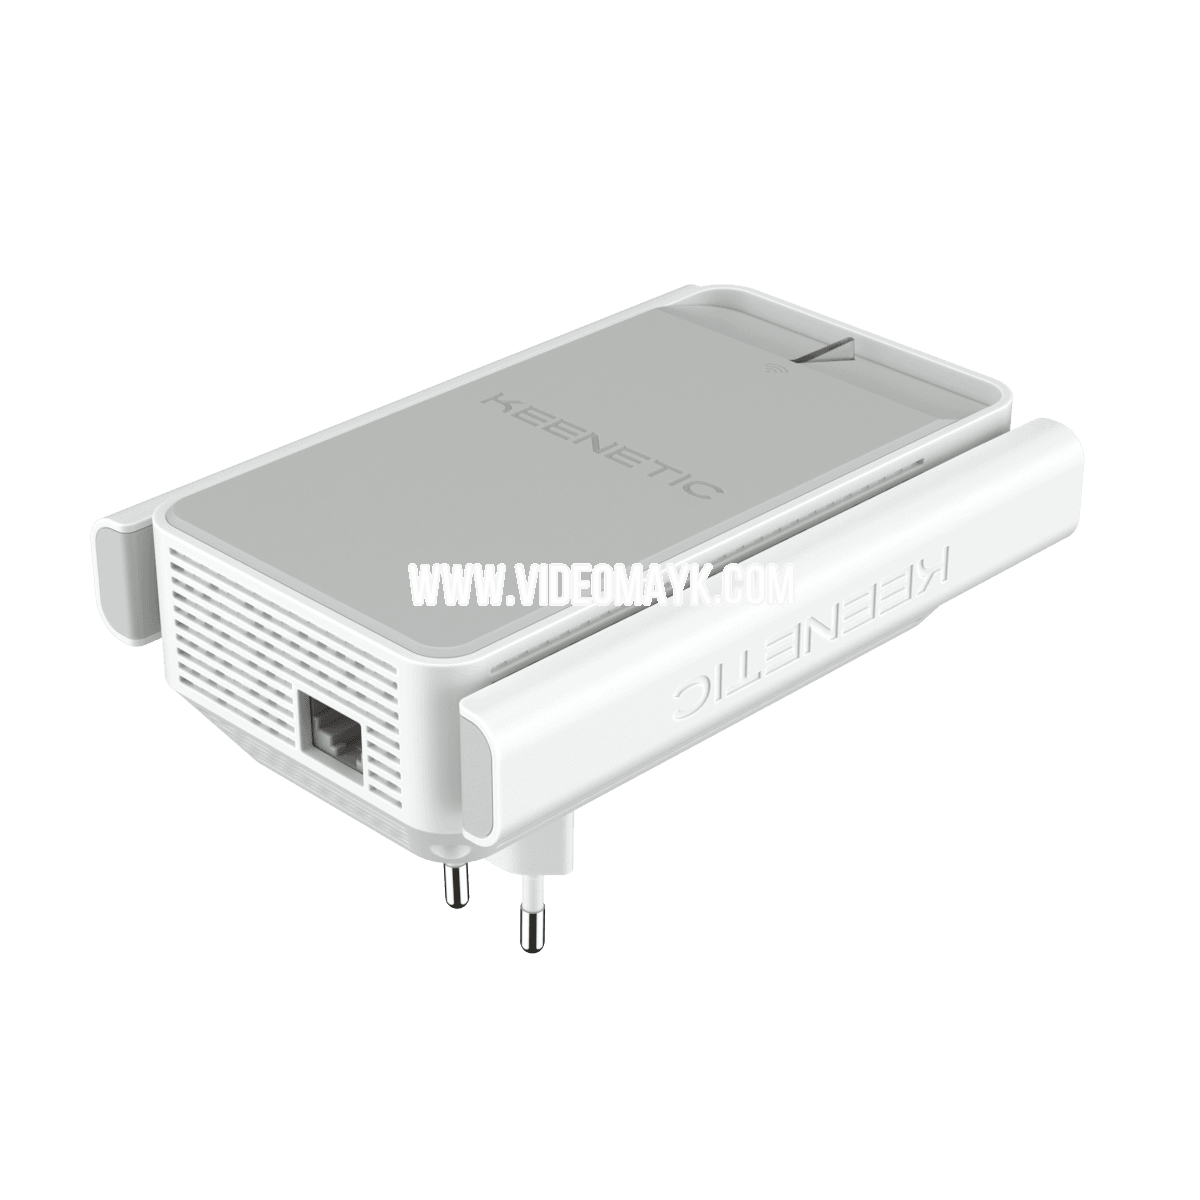 Ретранслятор Keenetic Buddy 5 (KN-3311) Двухдиапазонный Mesh-ретранслятор сигнала Wi-Fi